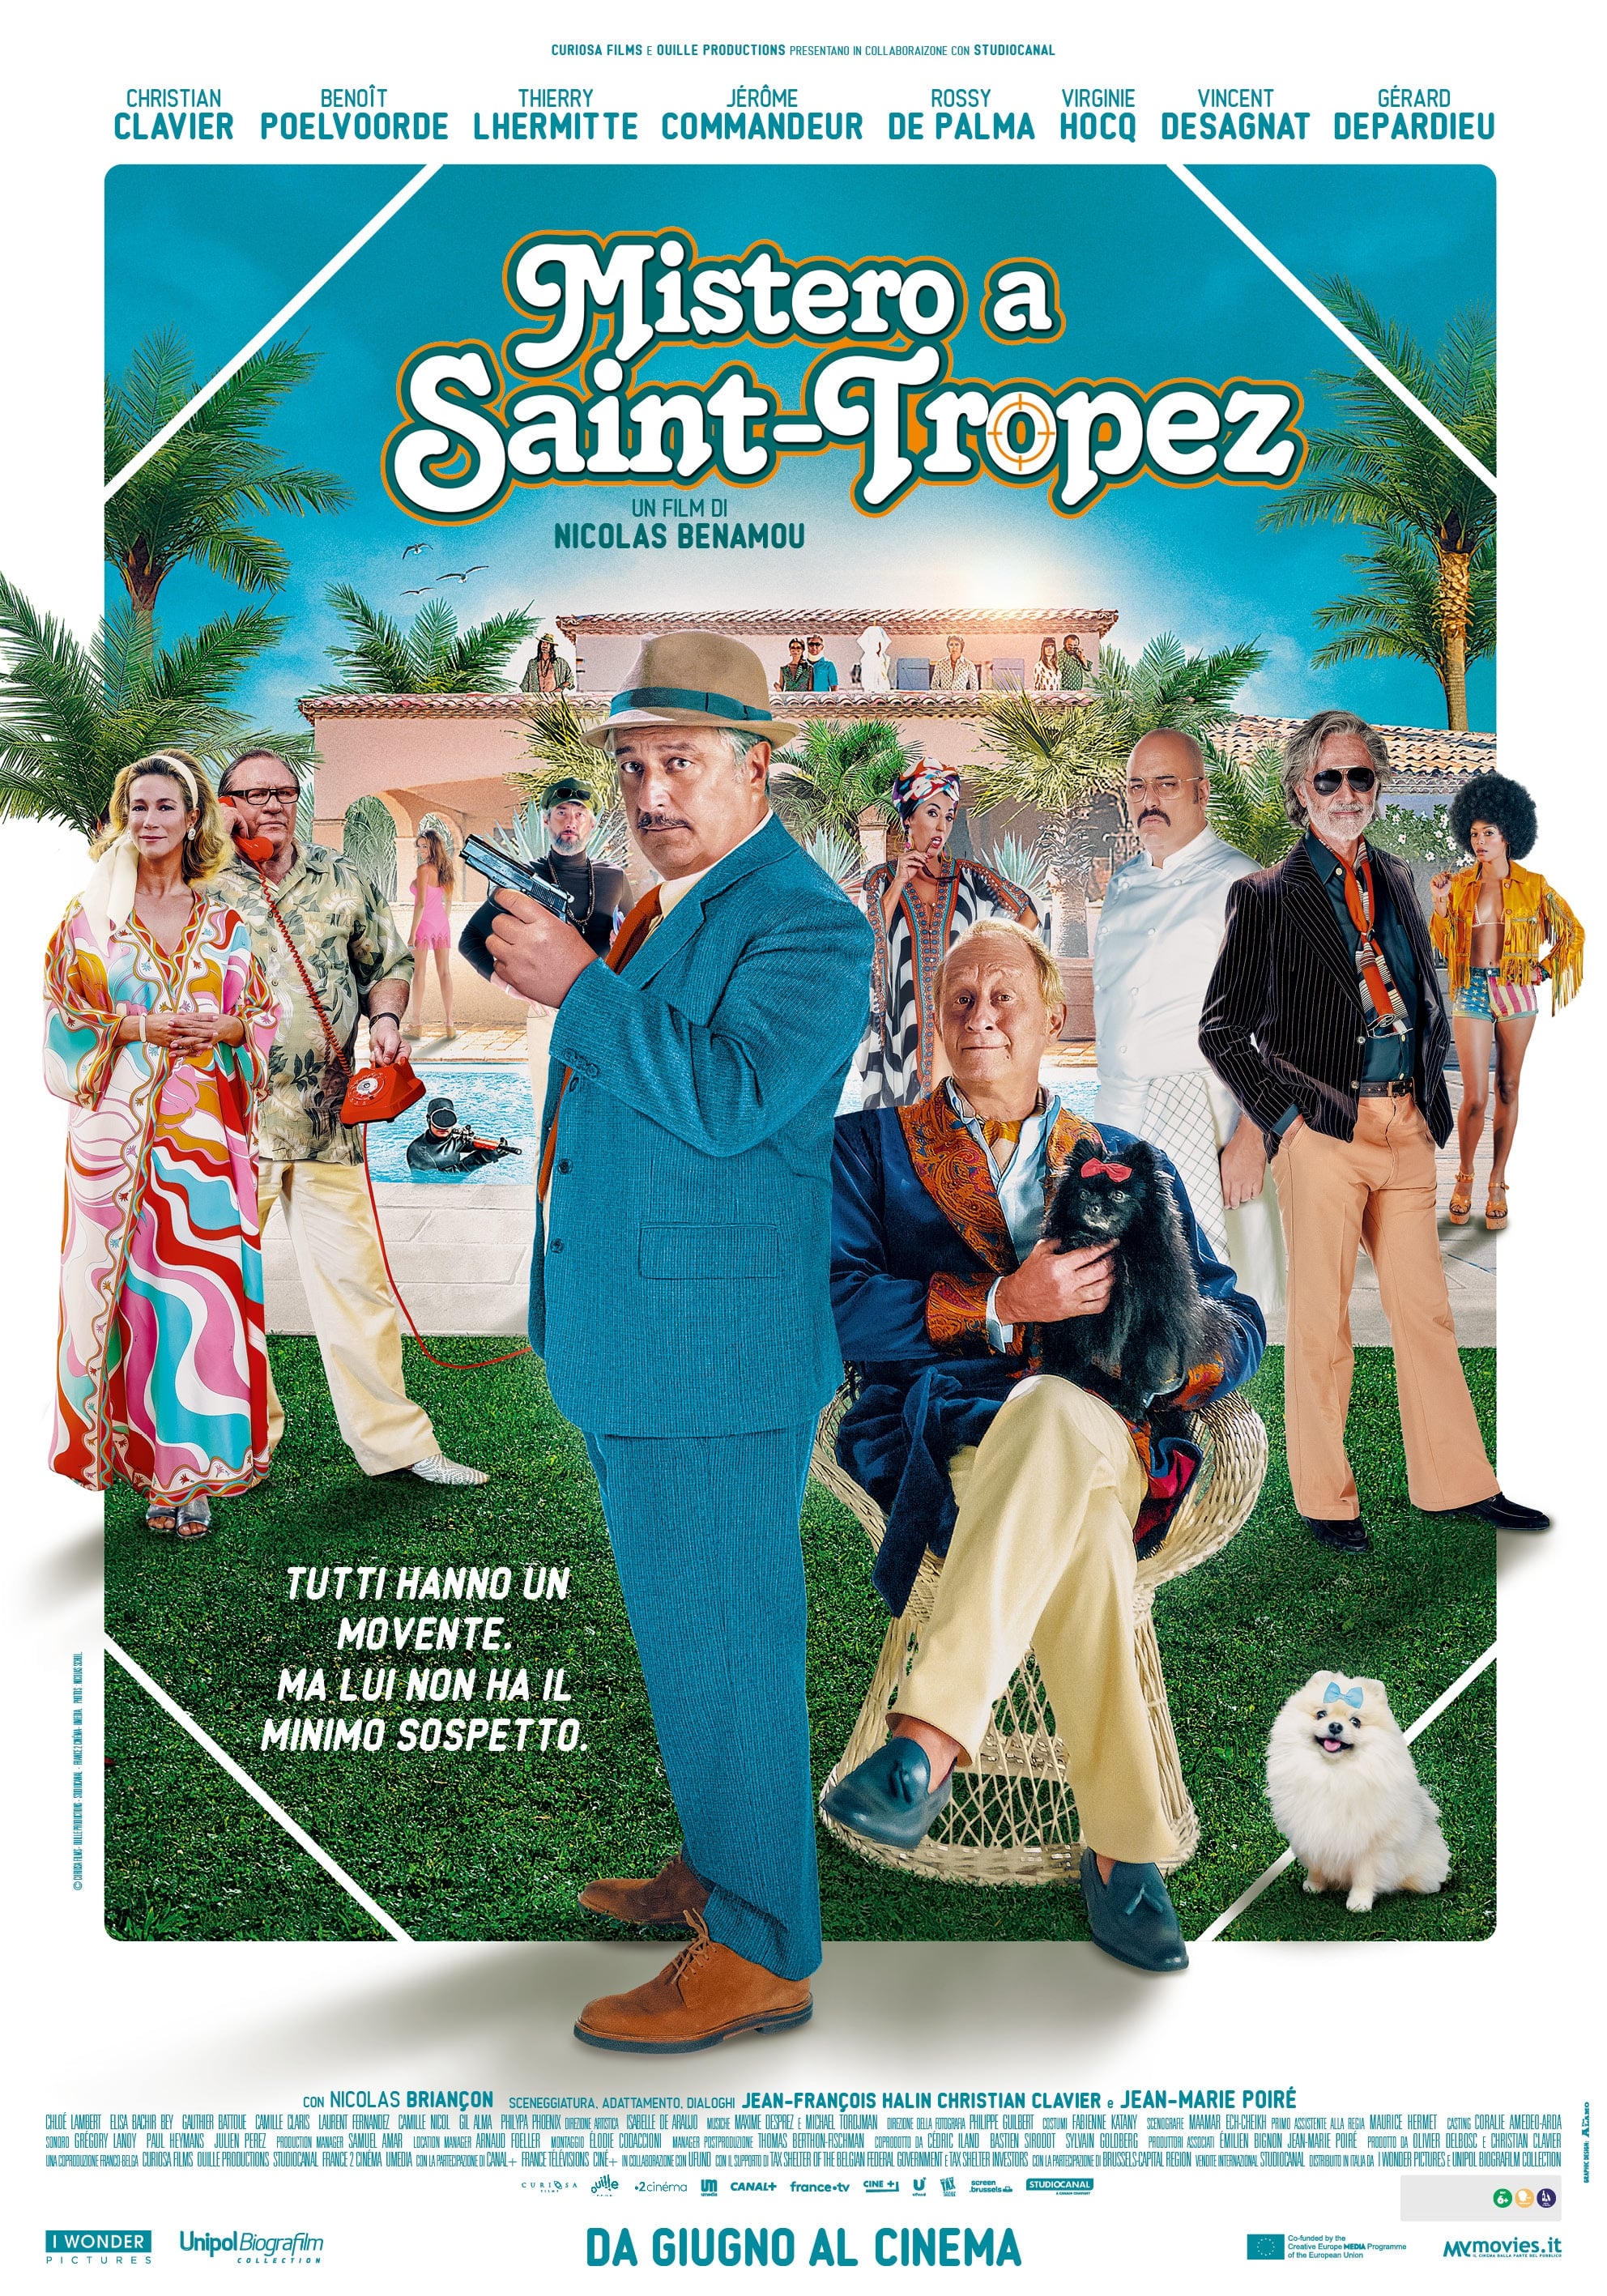 Mistero a Saint-Tropez film